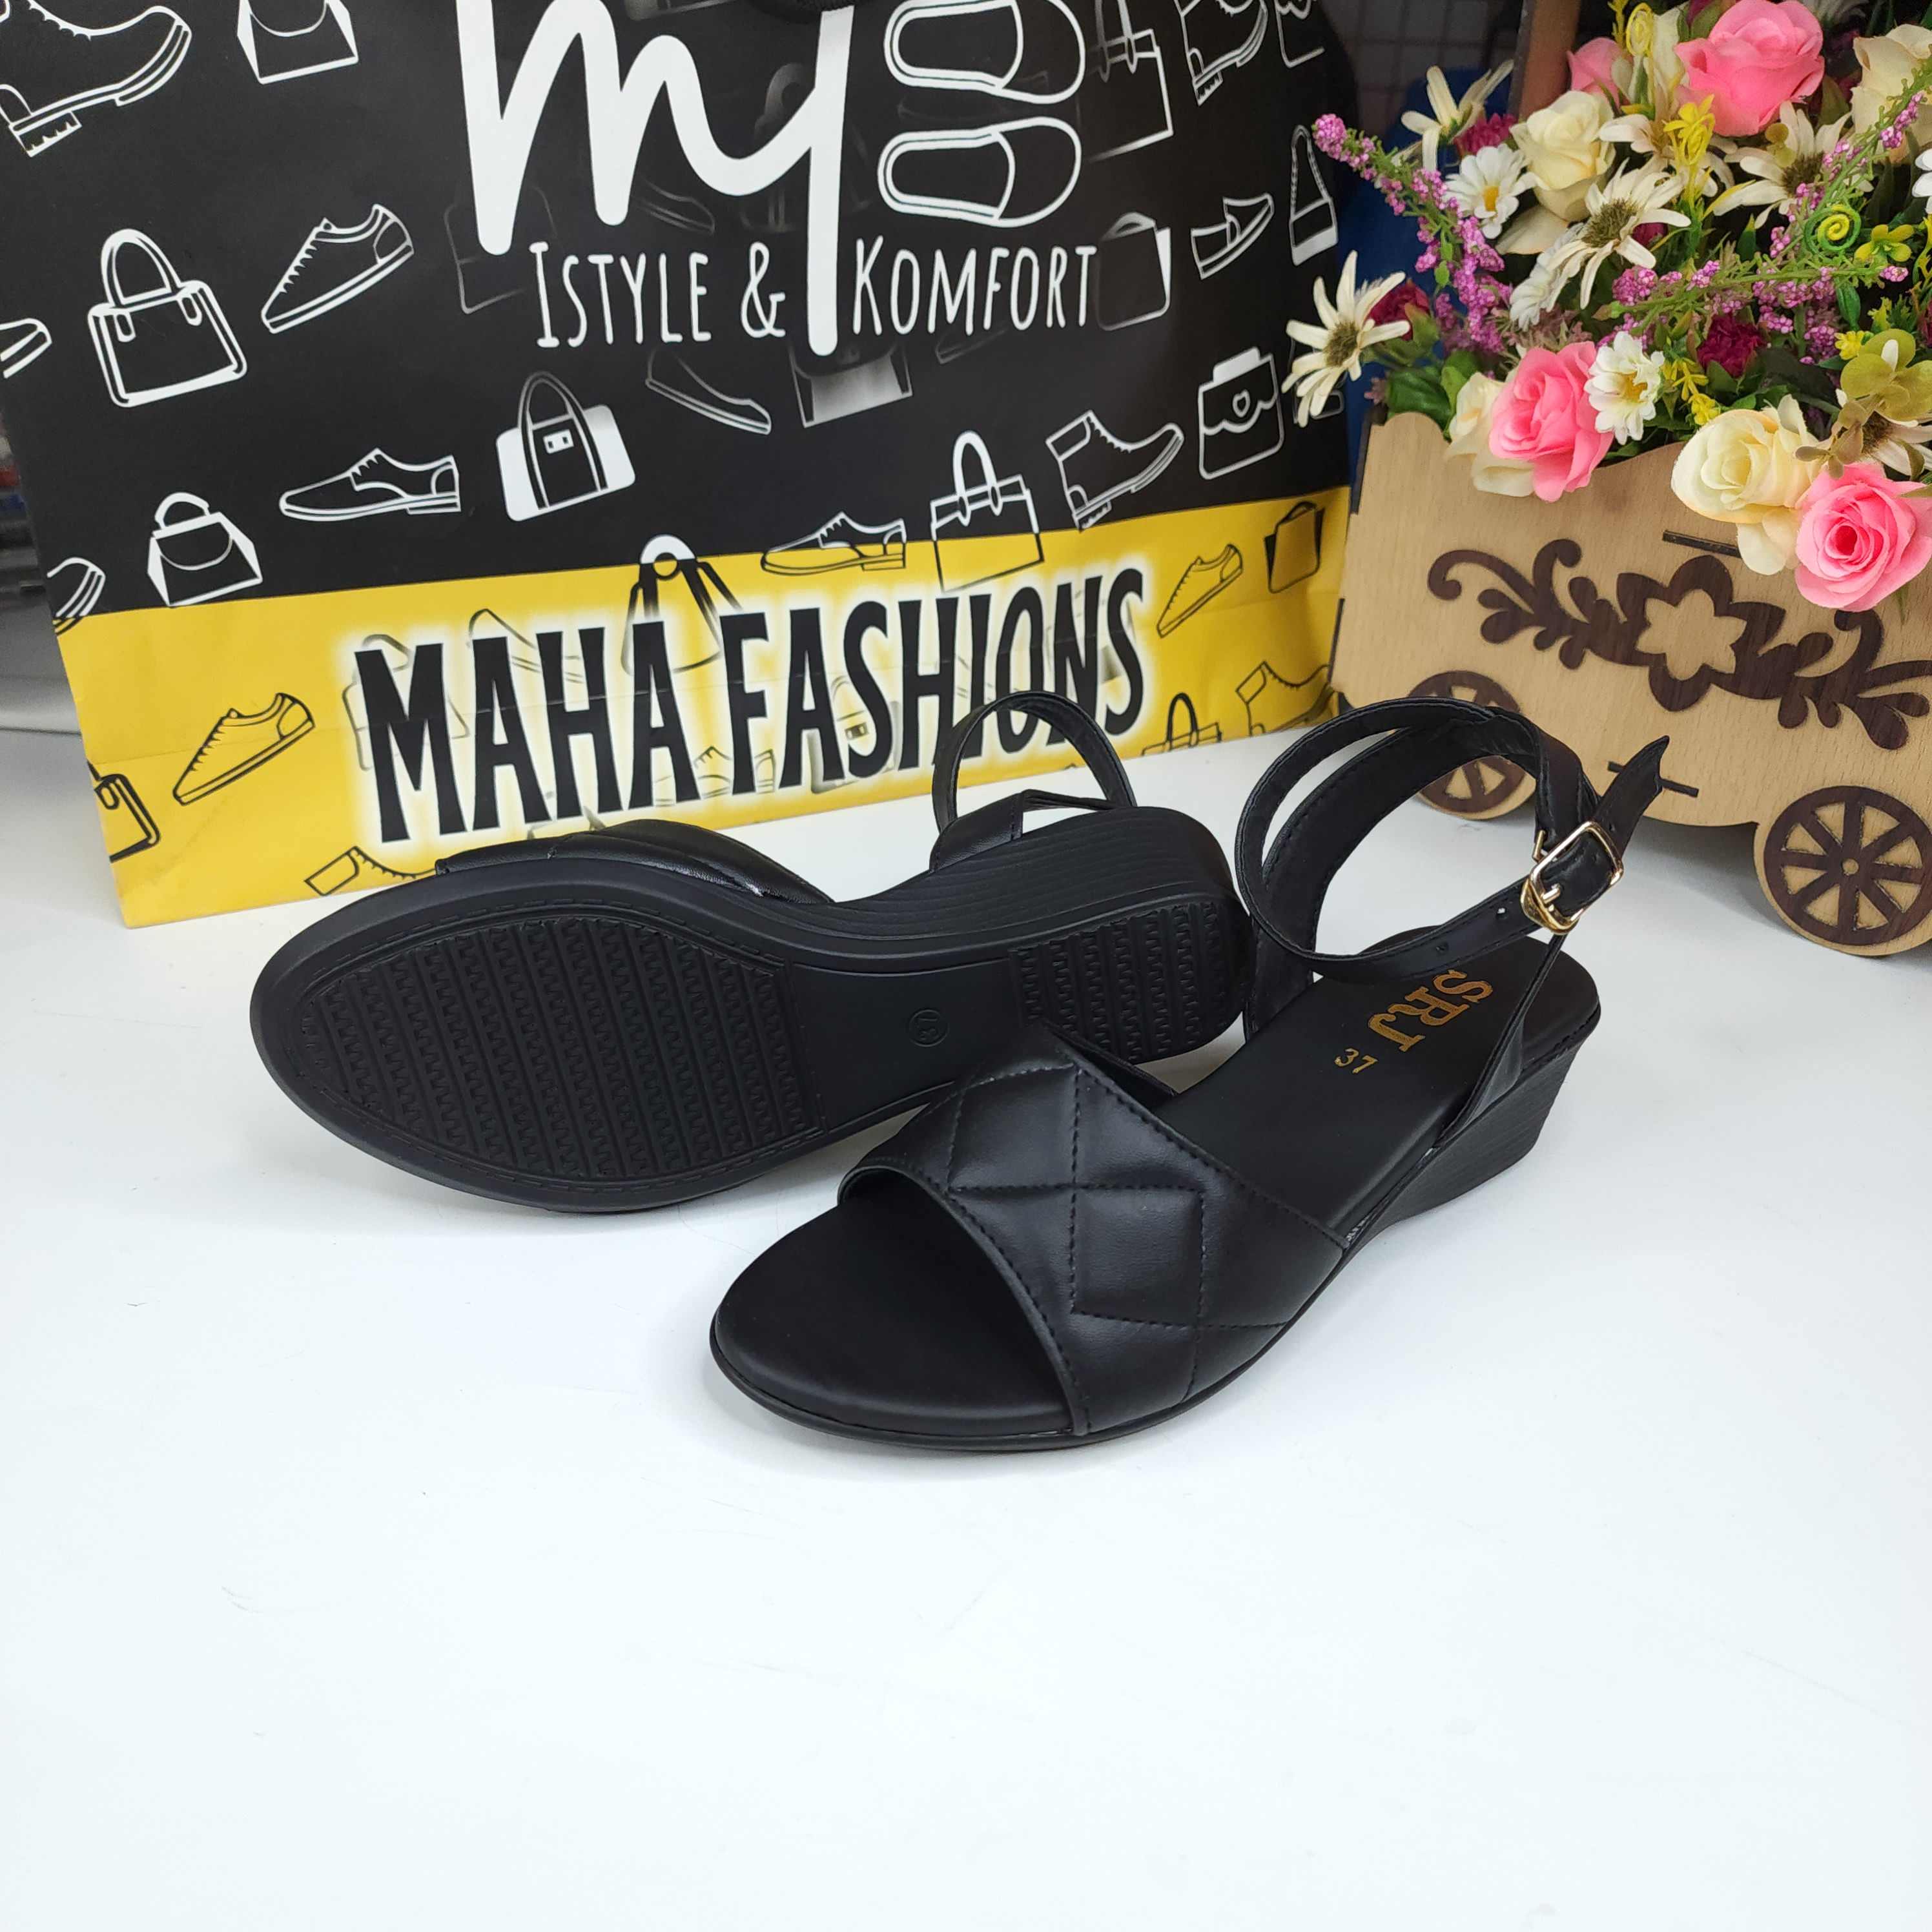 SRJ-027 BLACK - Maha fashions -  